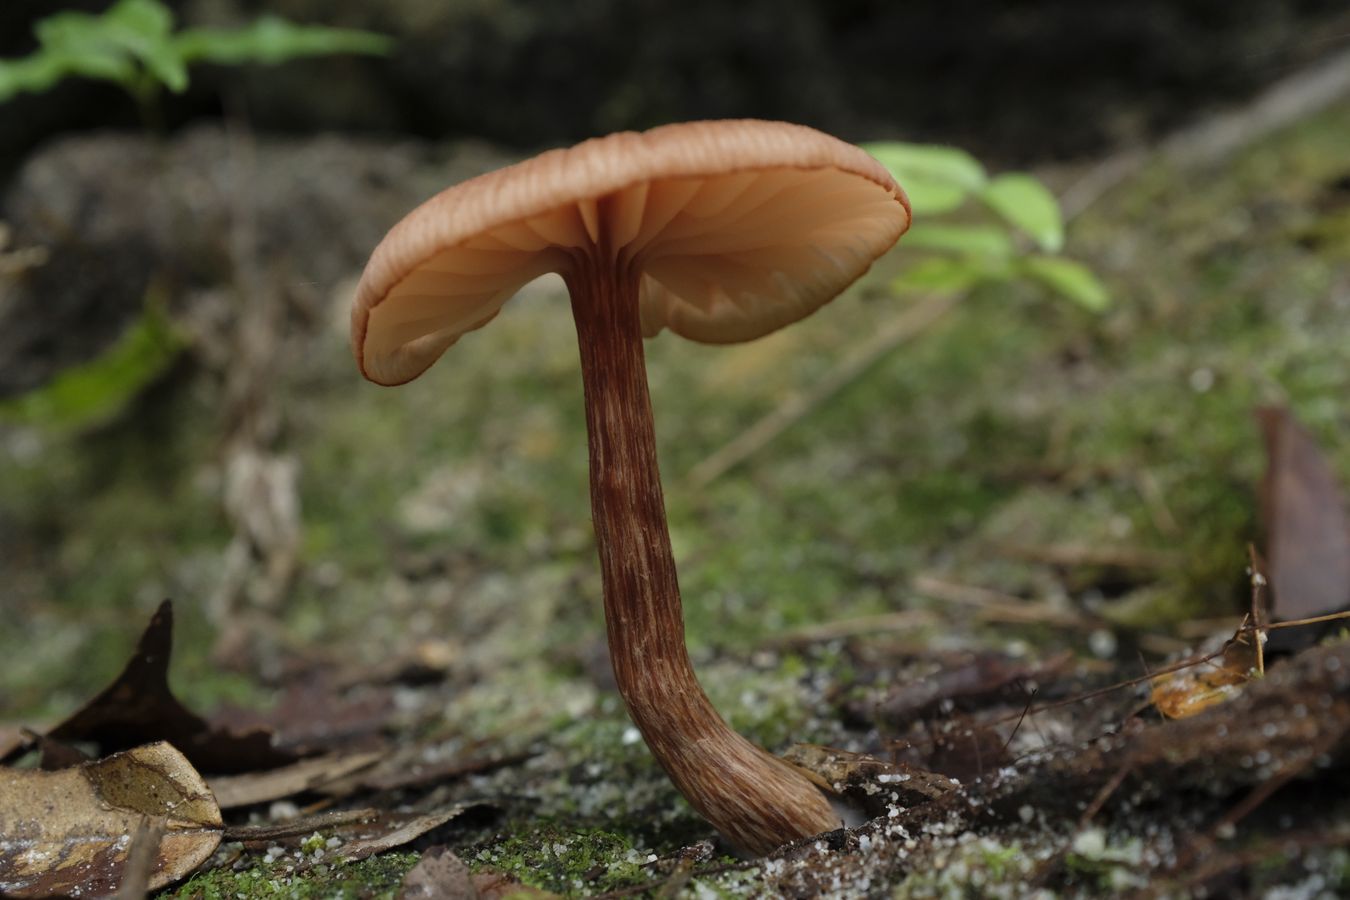 Fungus { Maybe Laccaria Hydnangiaceae